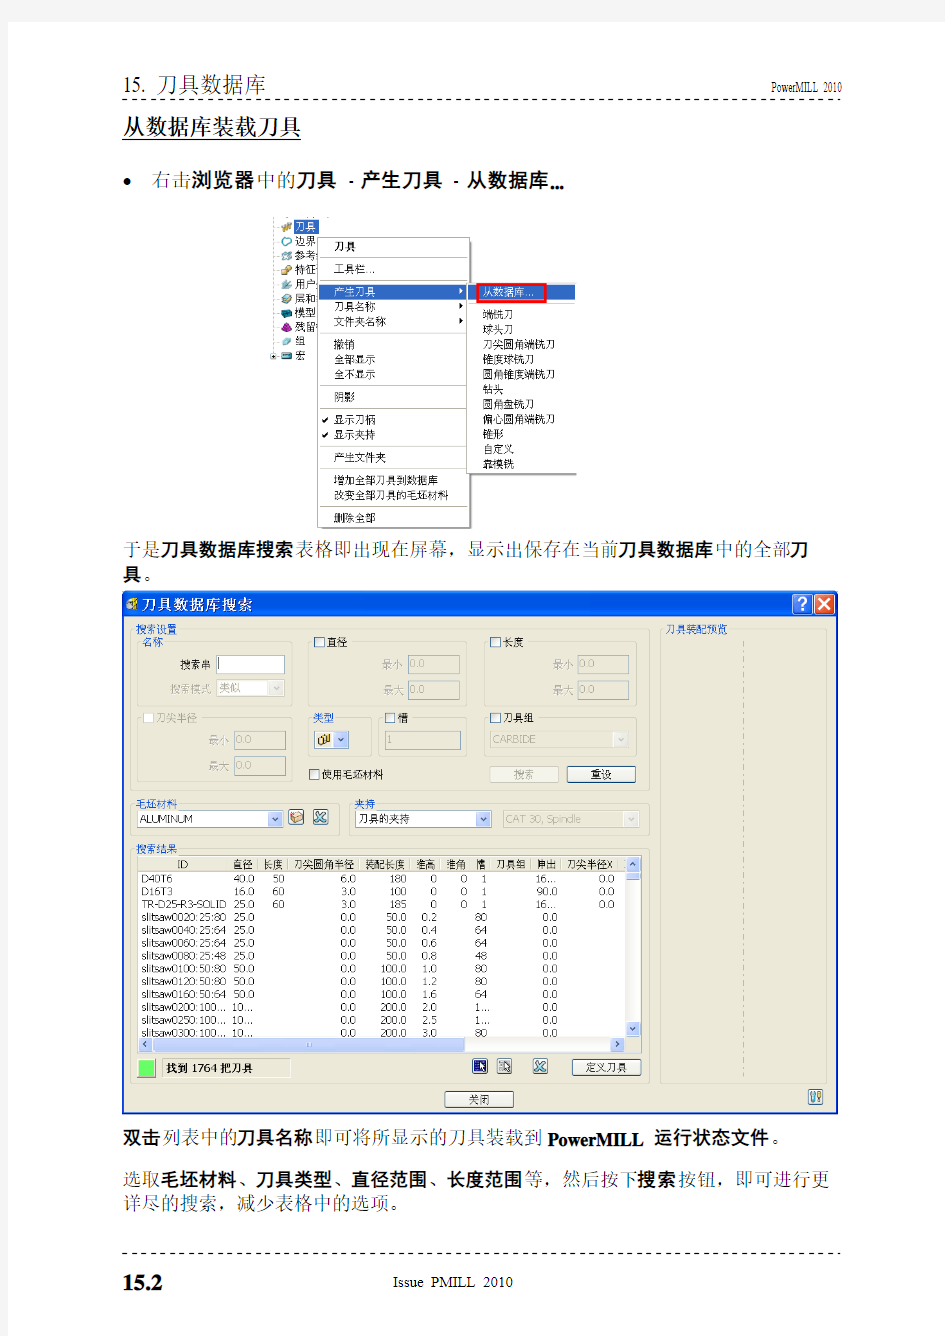 PowerMILL2010版之刀具数据库的设置